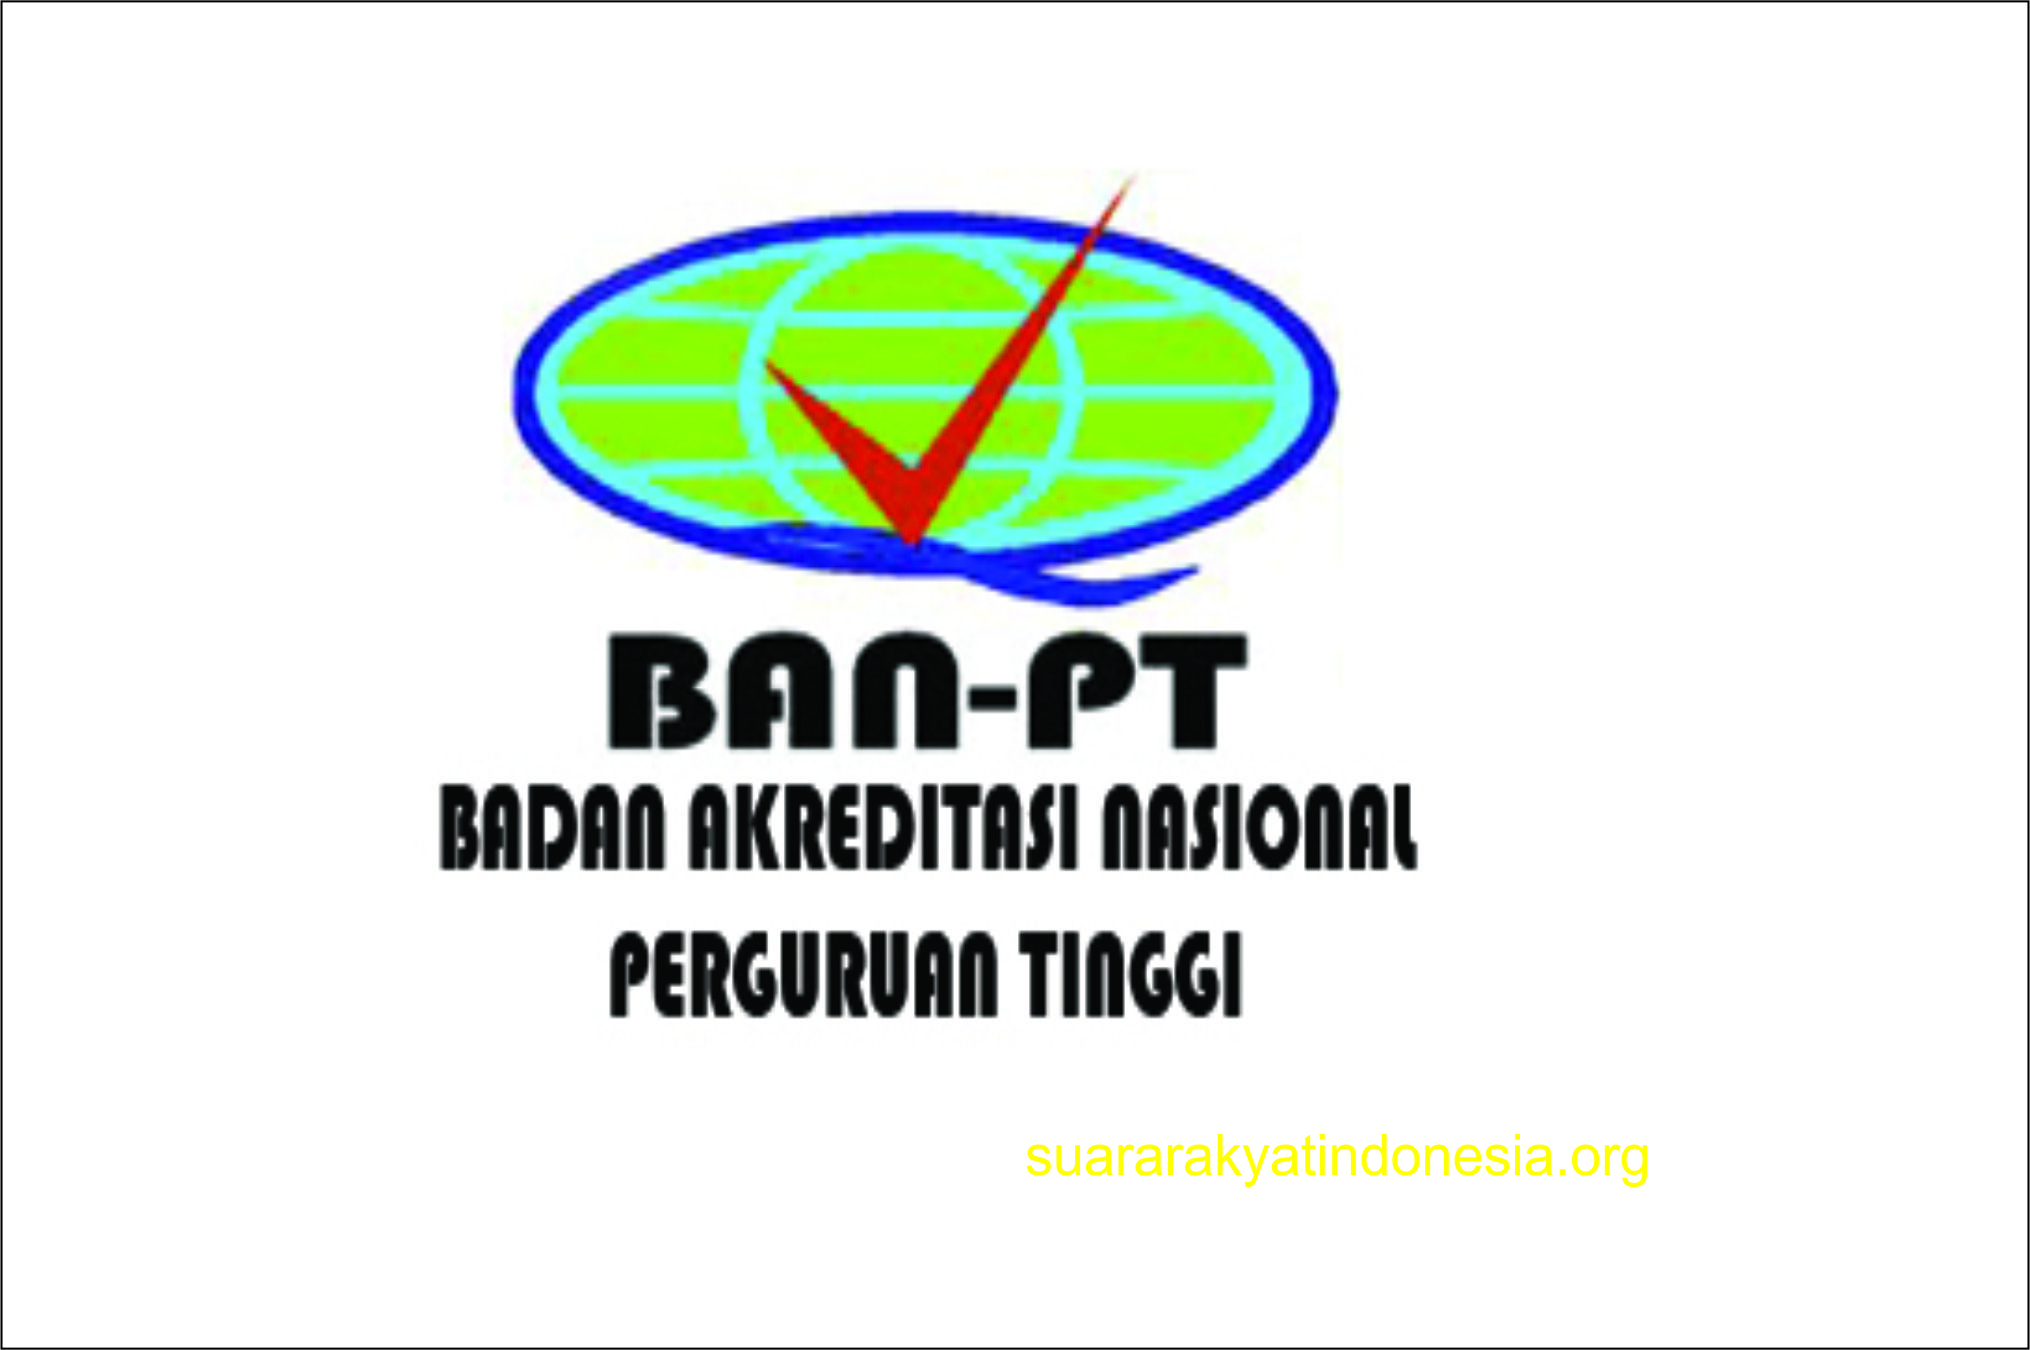 Ban Pt Program Studi